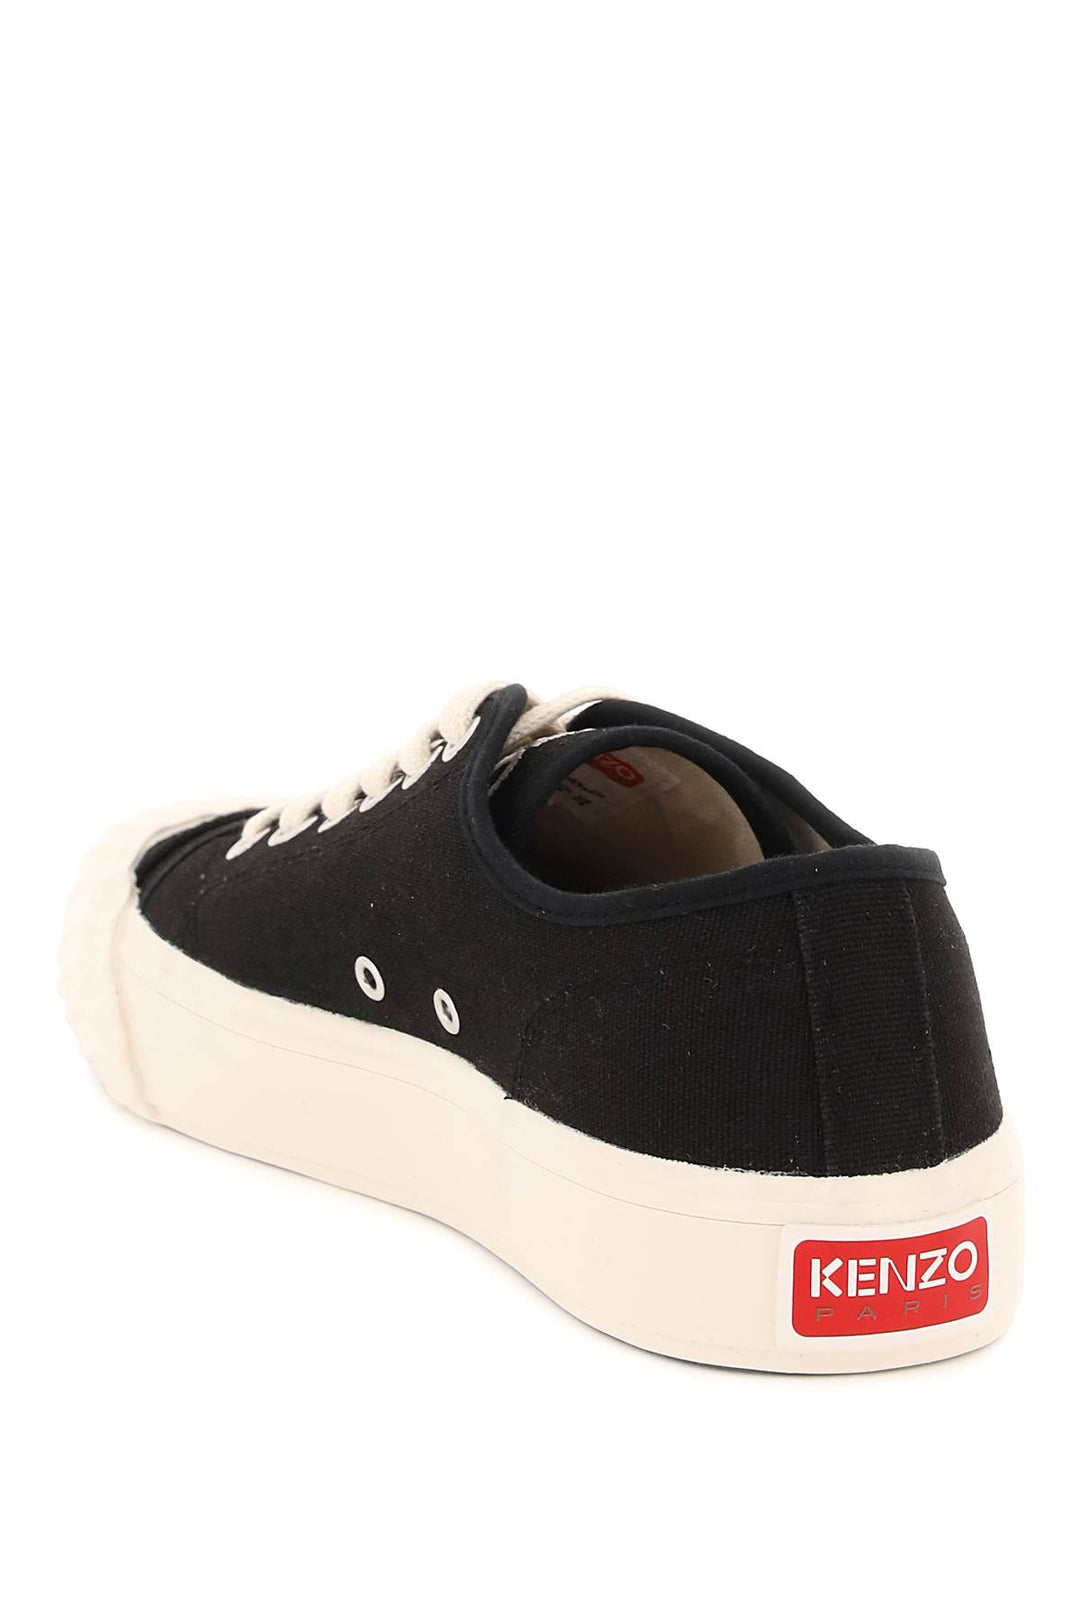 Sneakers Low Top 'Kenzoschool' - Kenzo - Uomo